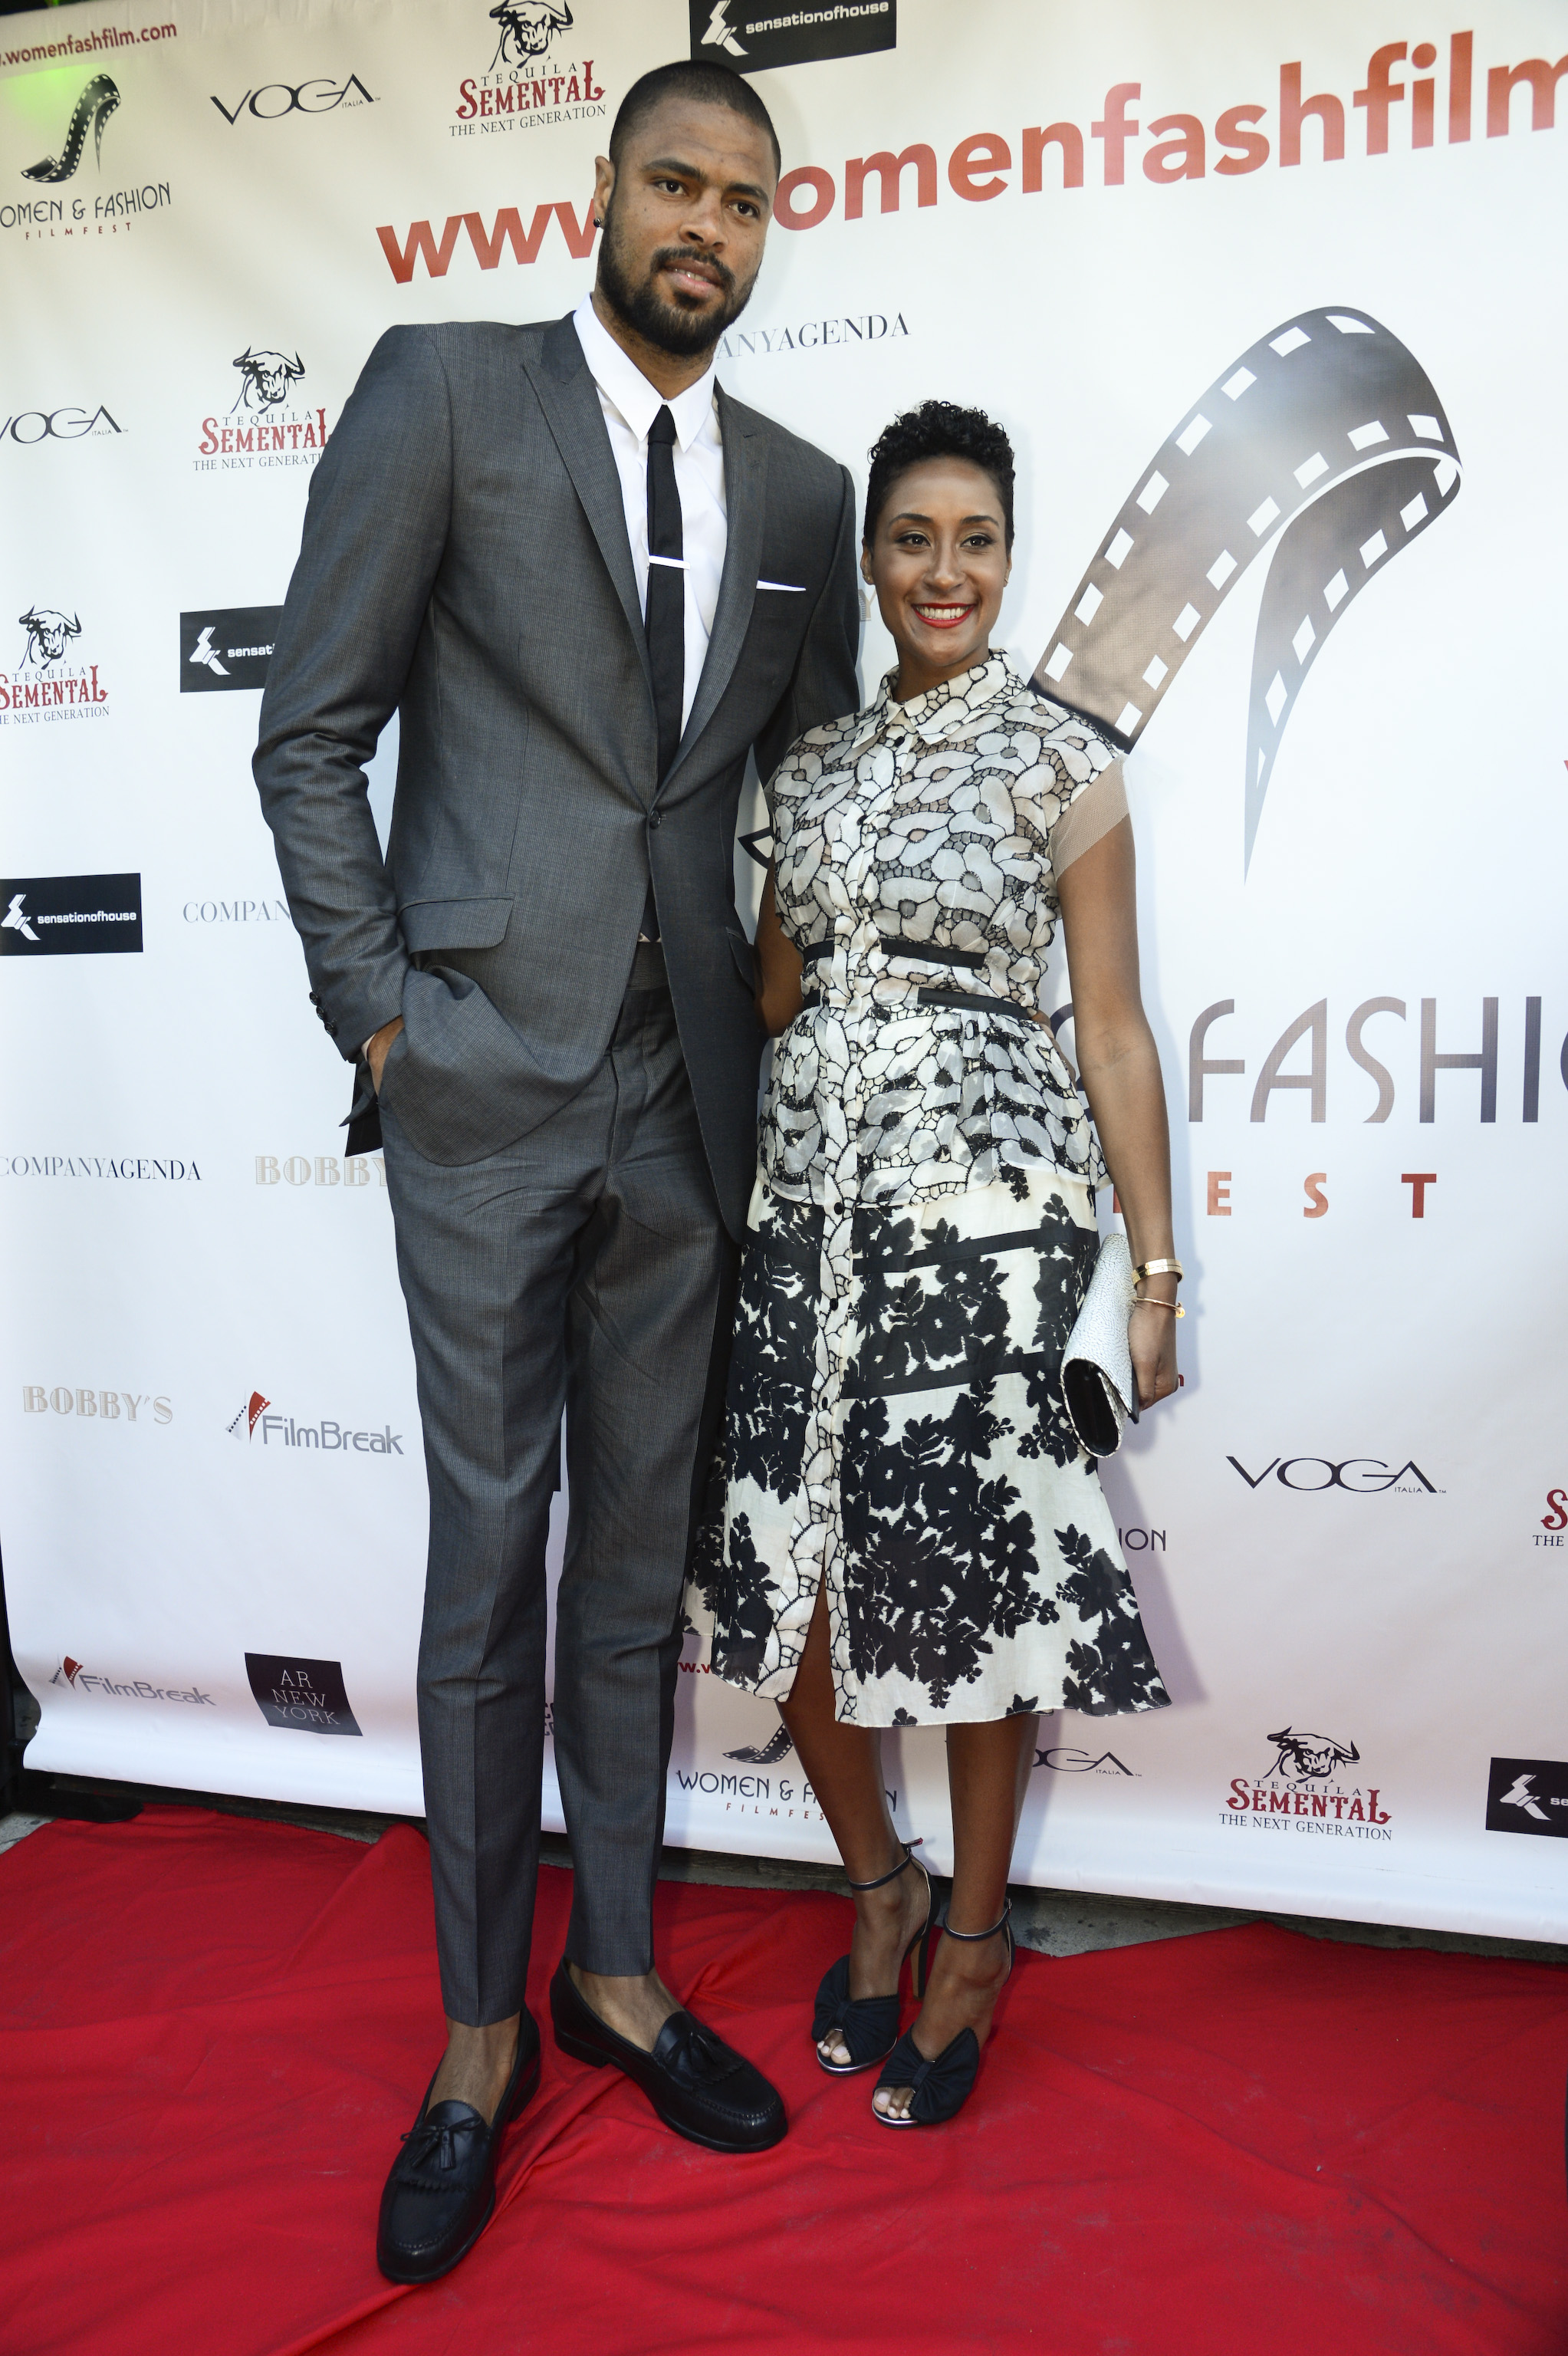 Tyson & Kimberly Chandler at the Women & Fashion FilmFest